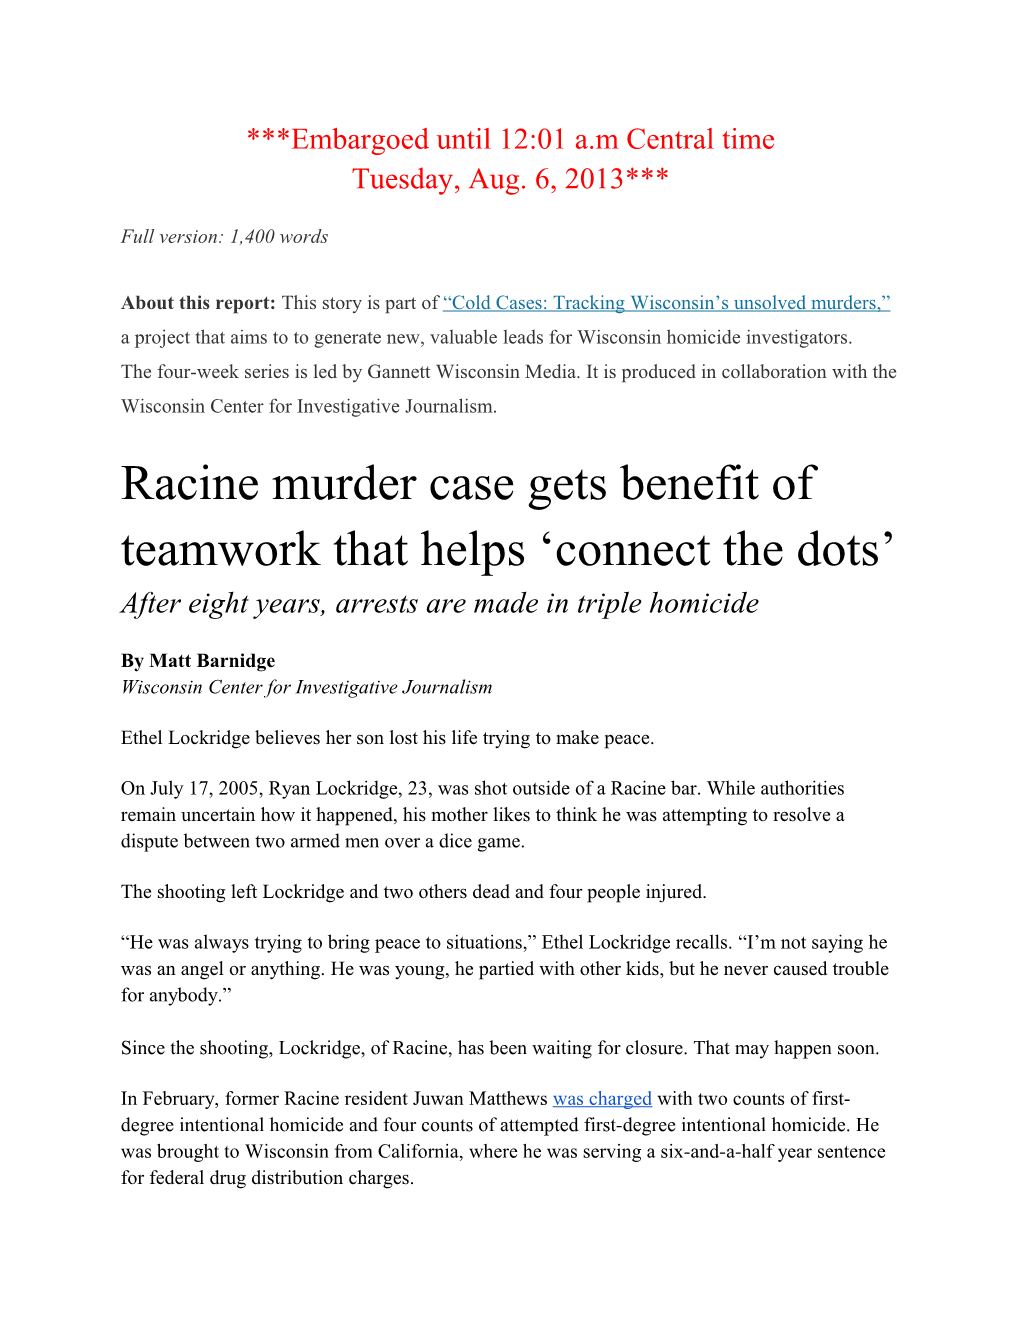 Racine Cold Case Full Version